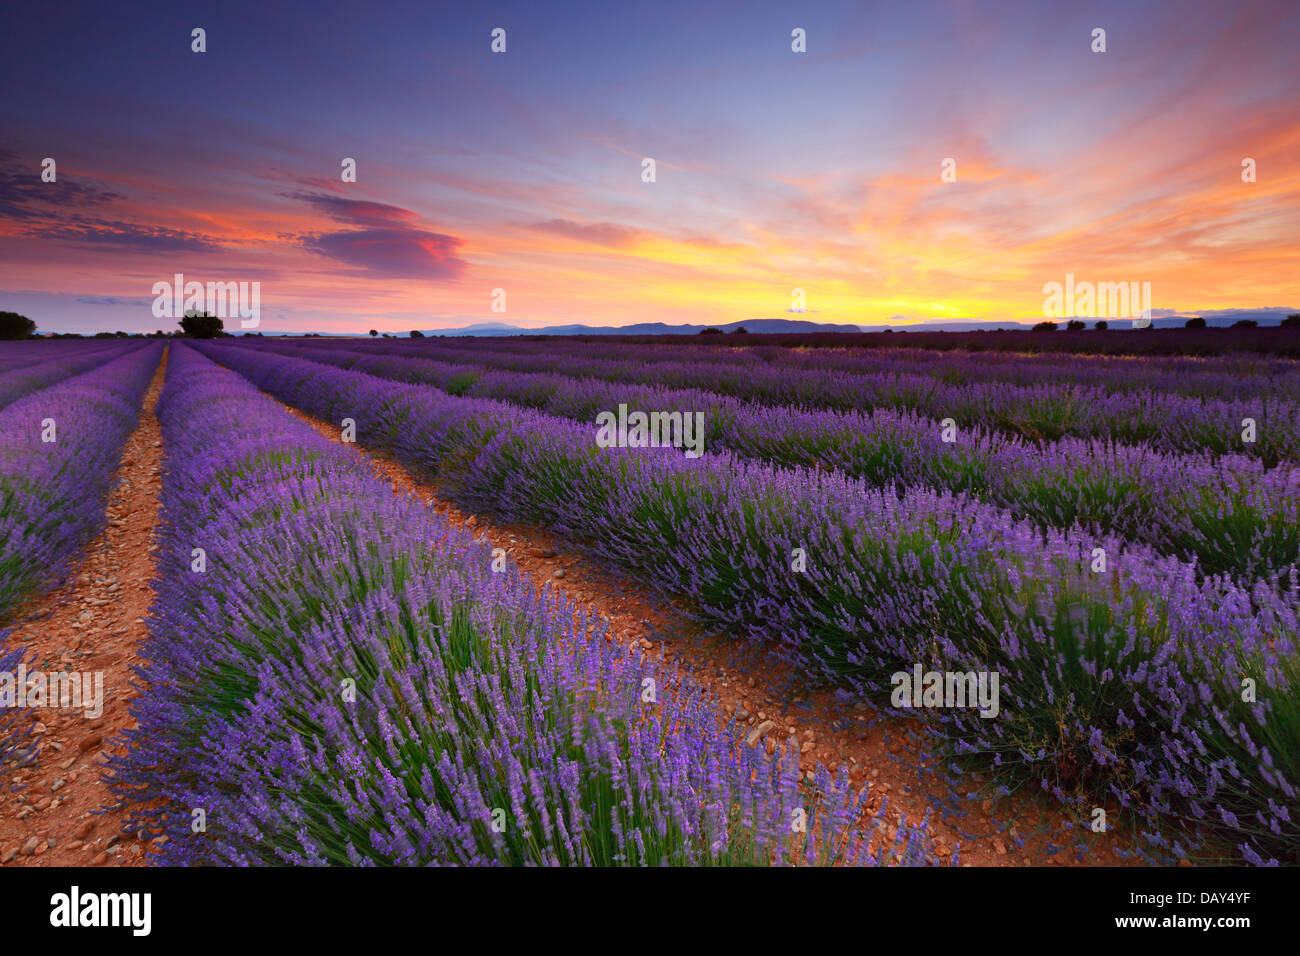 Lavender field sunset landscape Stock Photo